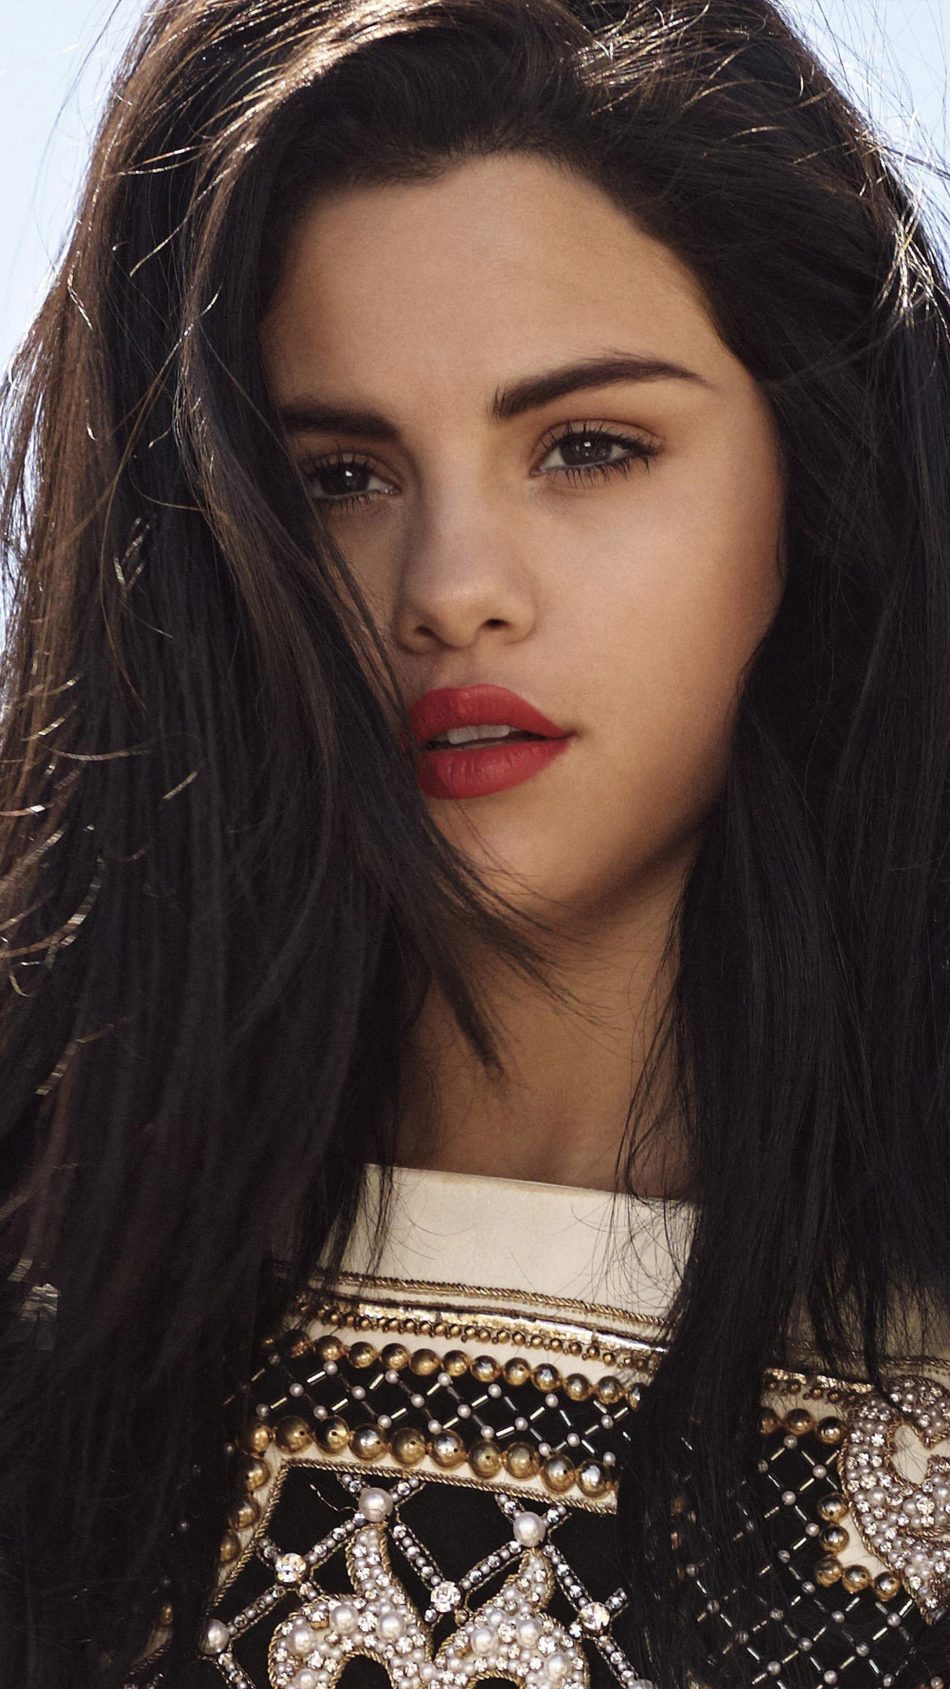 Beautiful Singer Song-writer Selena Gomez 4K Ultra HD Mobile Wallpaper